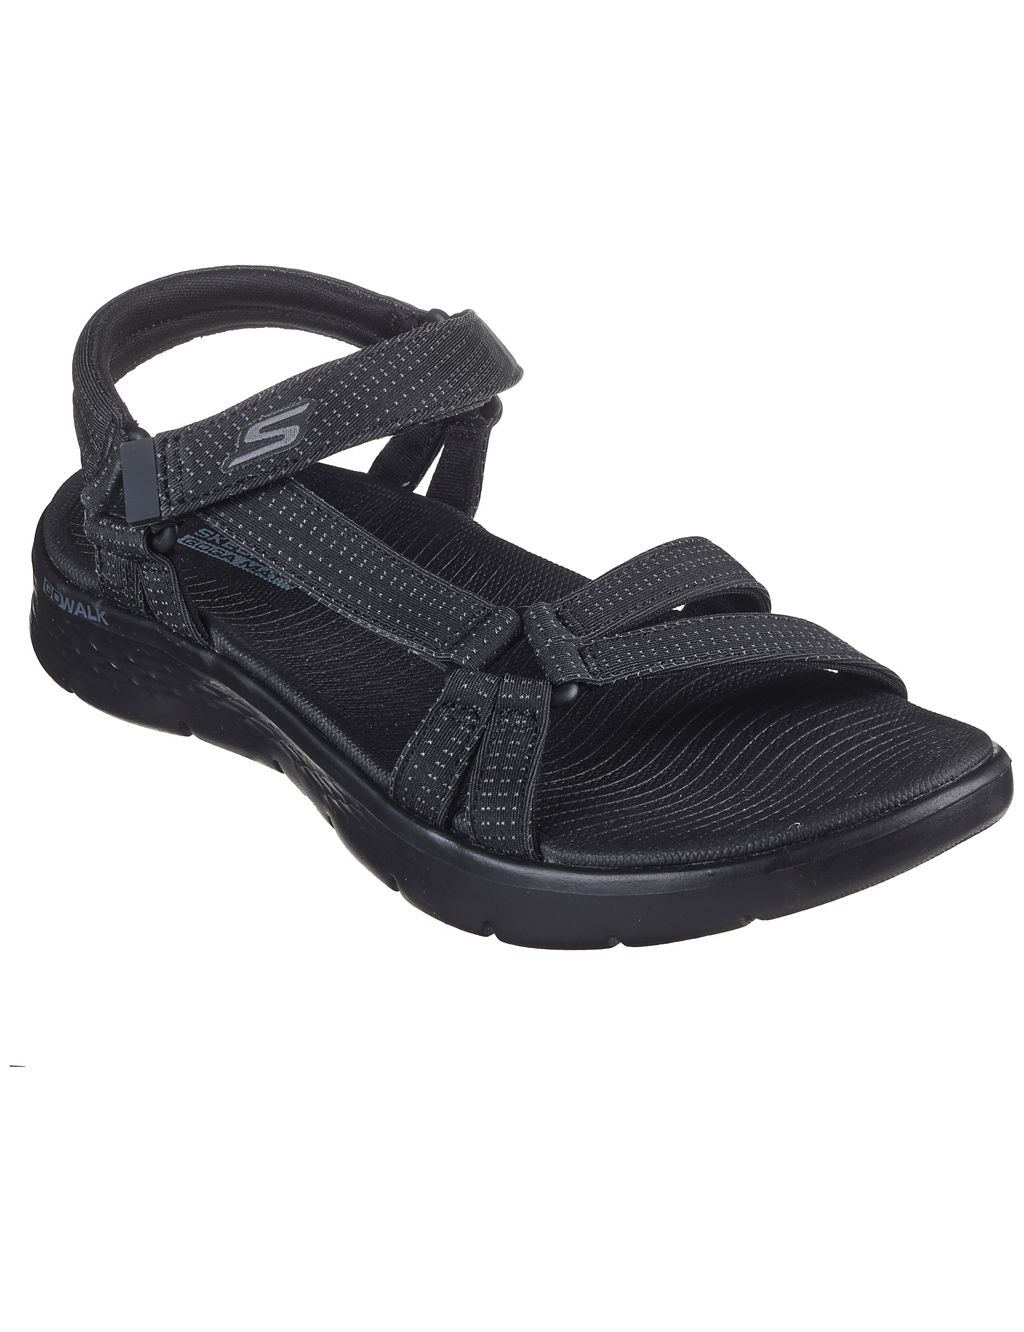 GO WALK® Flex Ankle Strap Flat Sandals 1 of 5